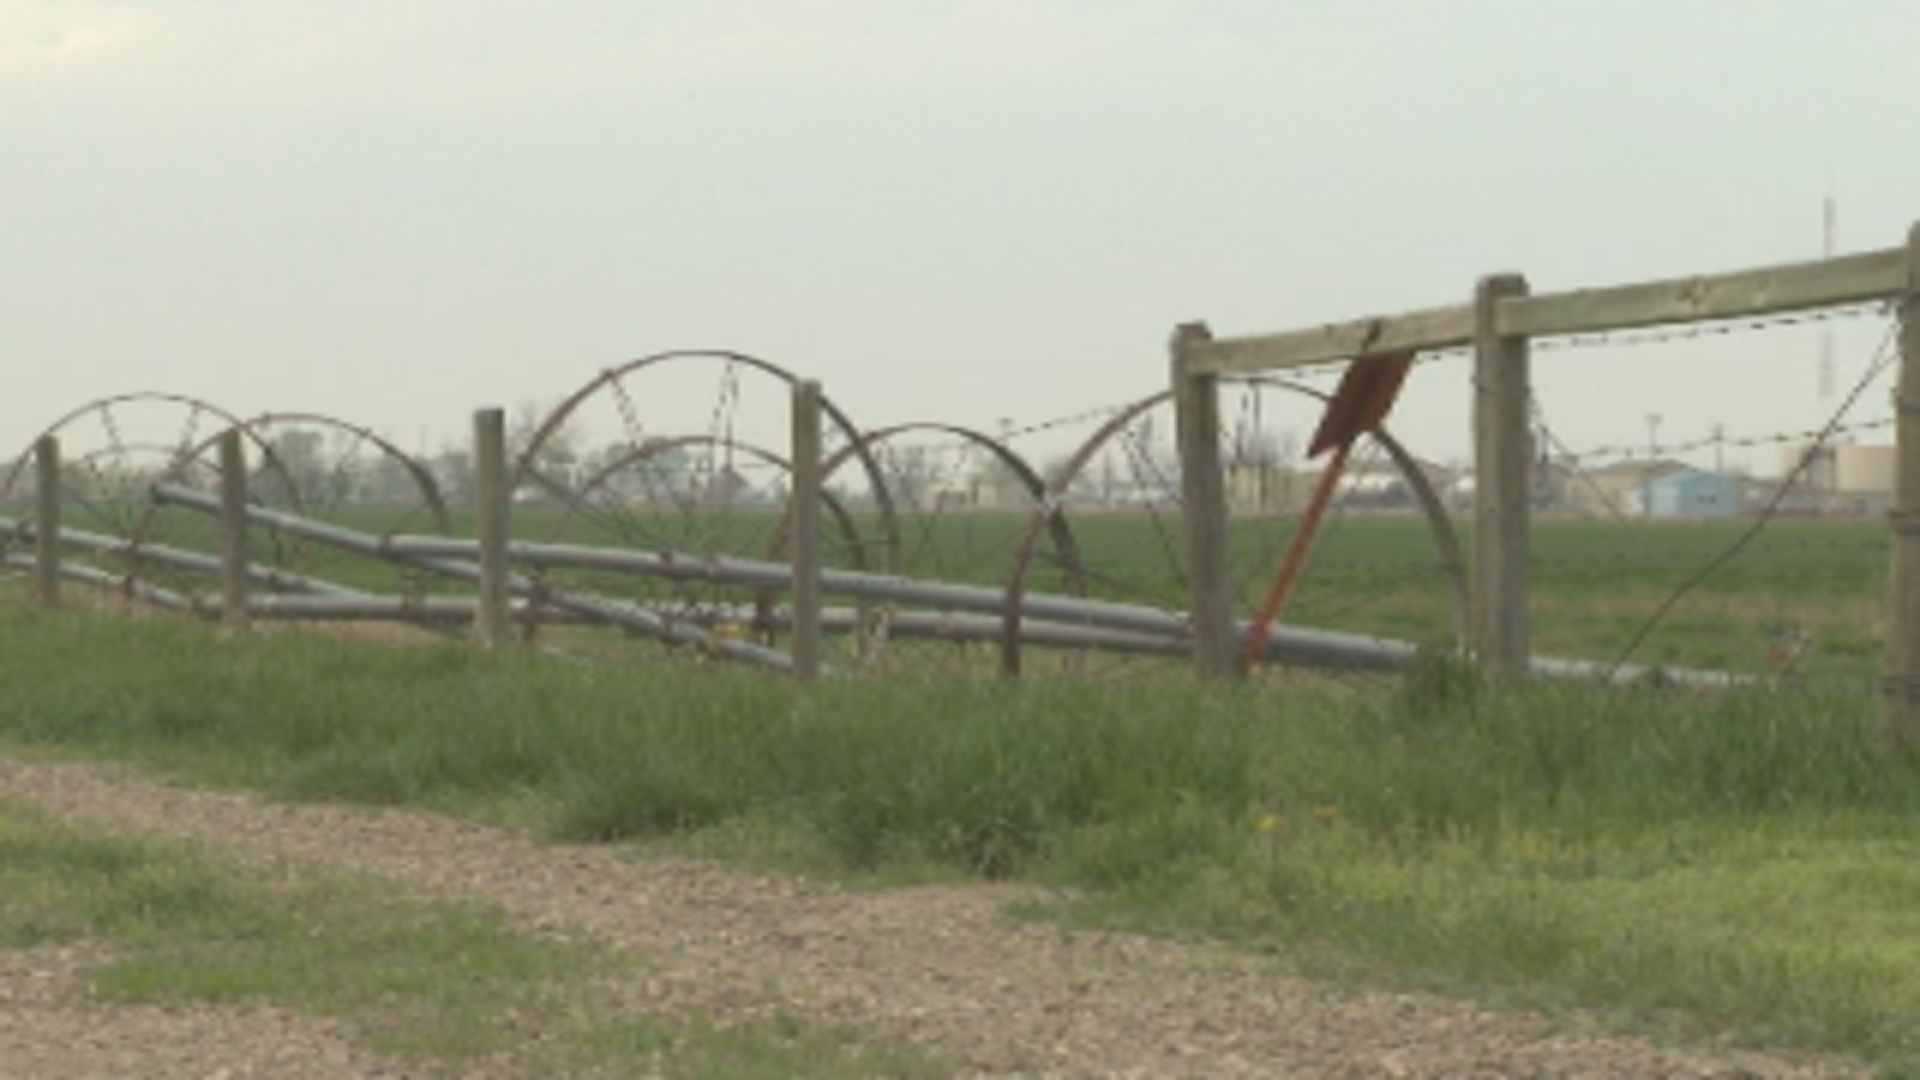 Irrigation season starts in southern Alberta